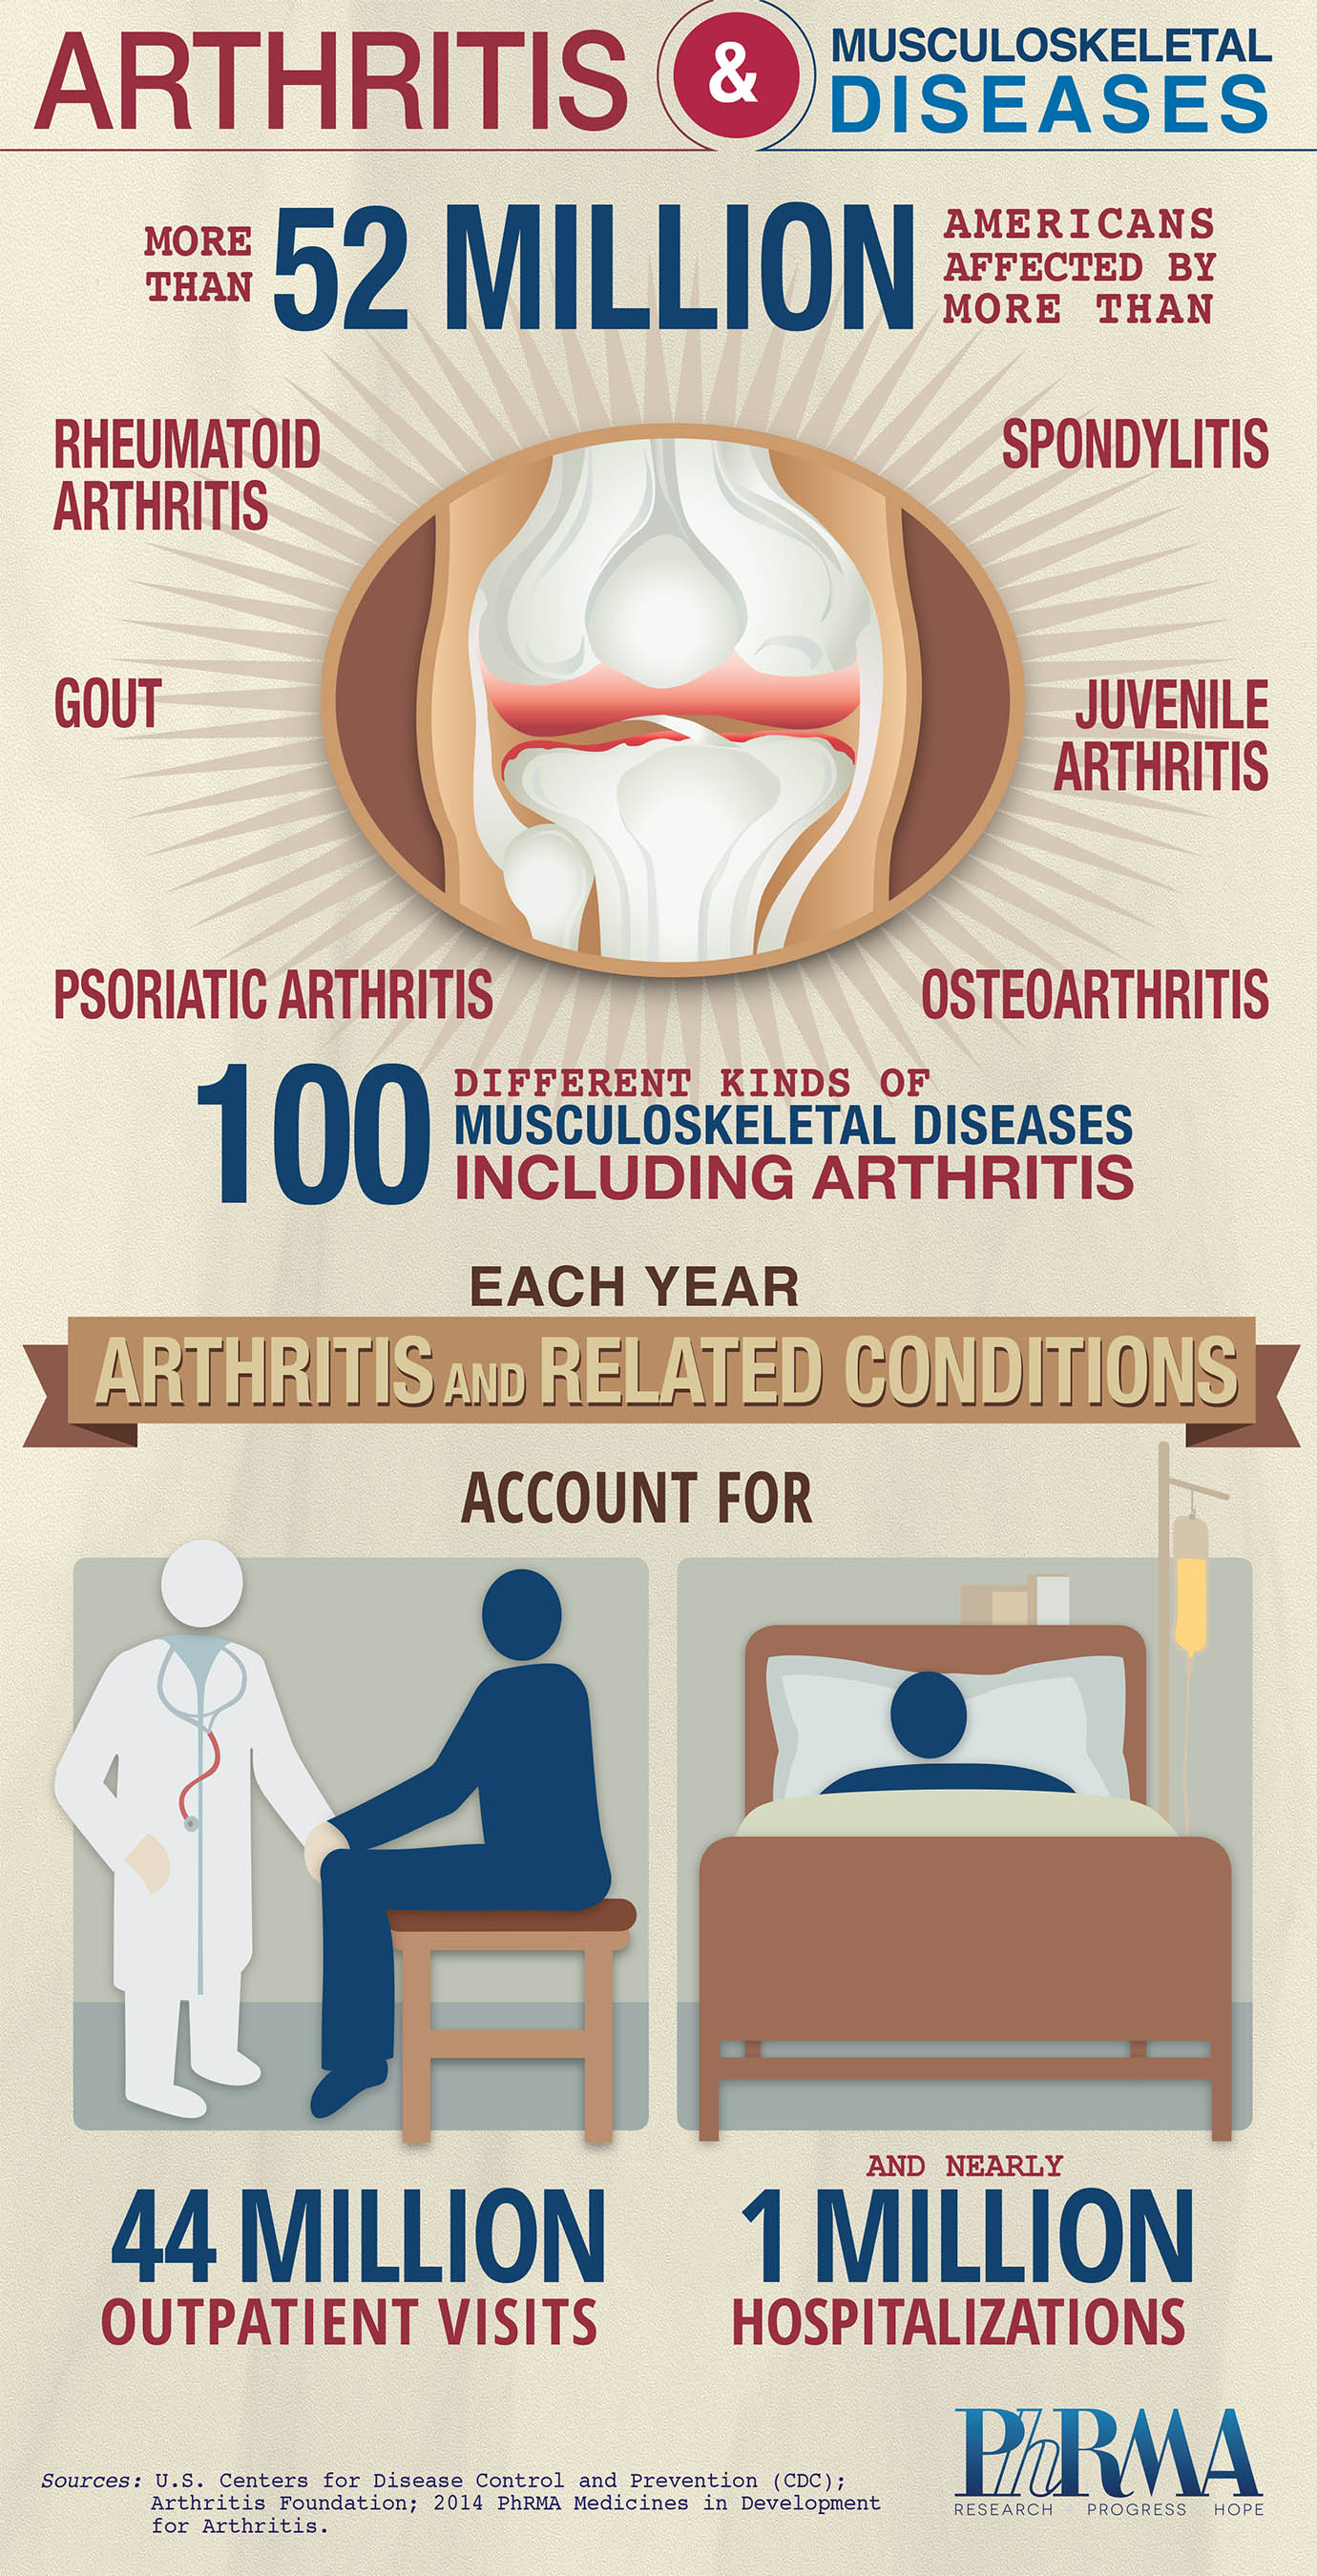 Arthritis & Musculoskeletal Diseases (source: PhRMA)